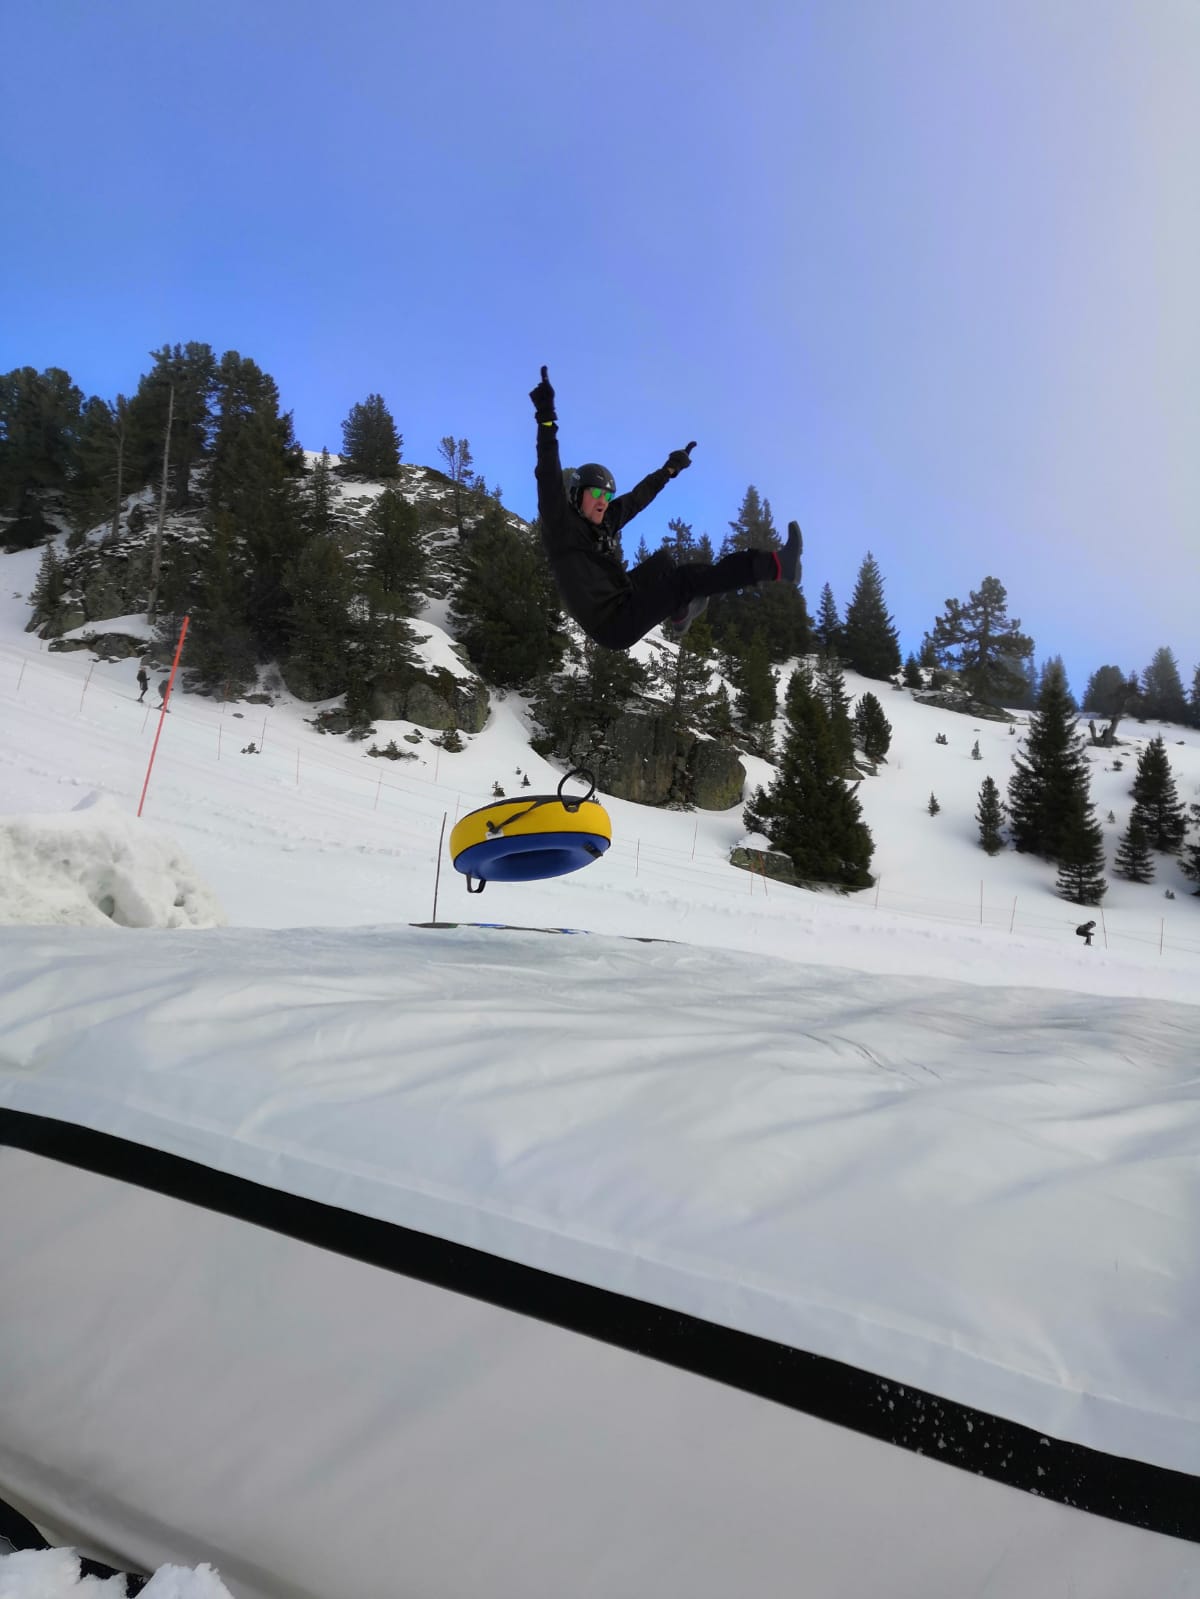 Chamrousse blog expérience test snowtubing tube park saut bag jump station ski montagne isère alpes france - © EM - OT Chamrousse